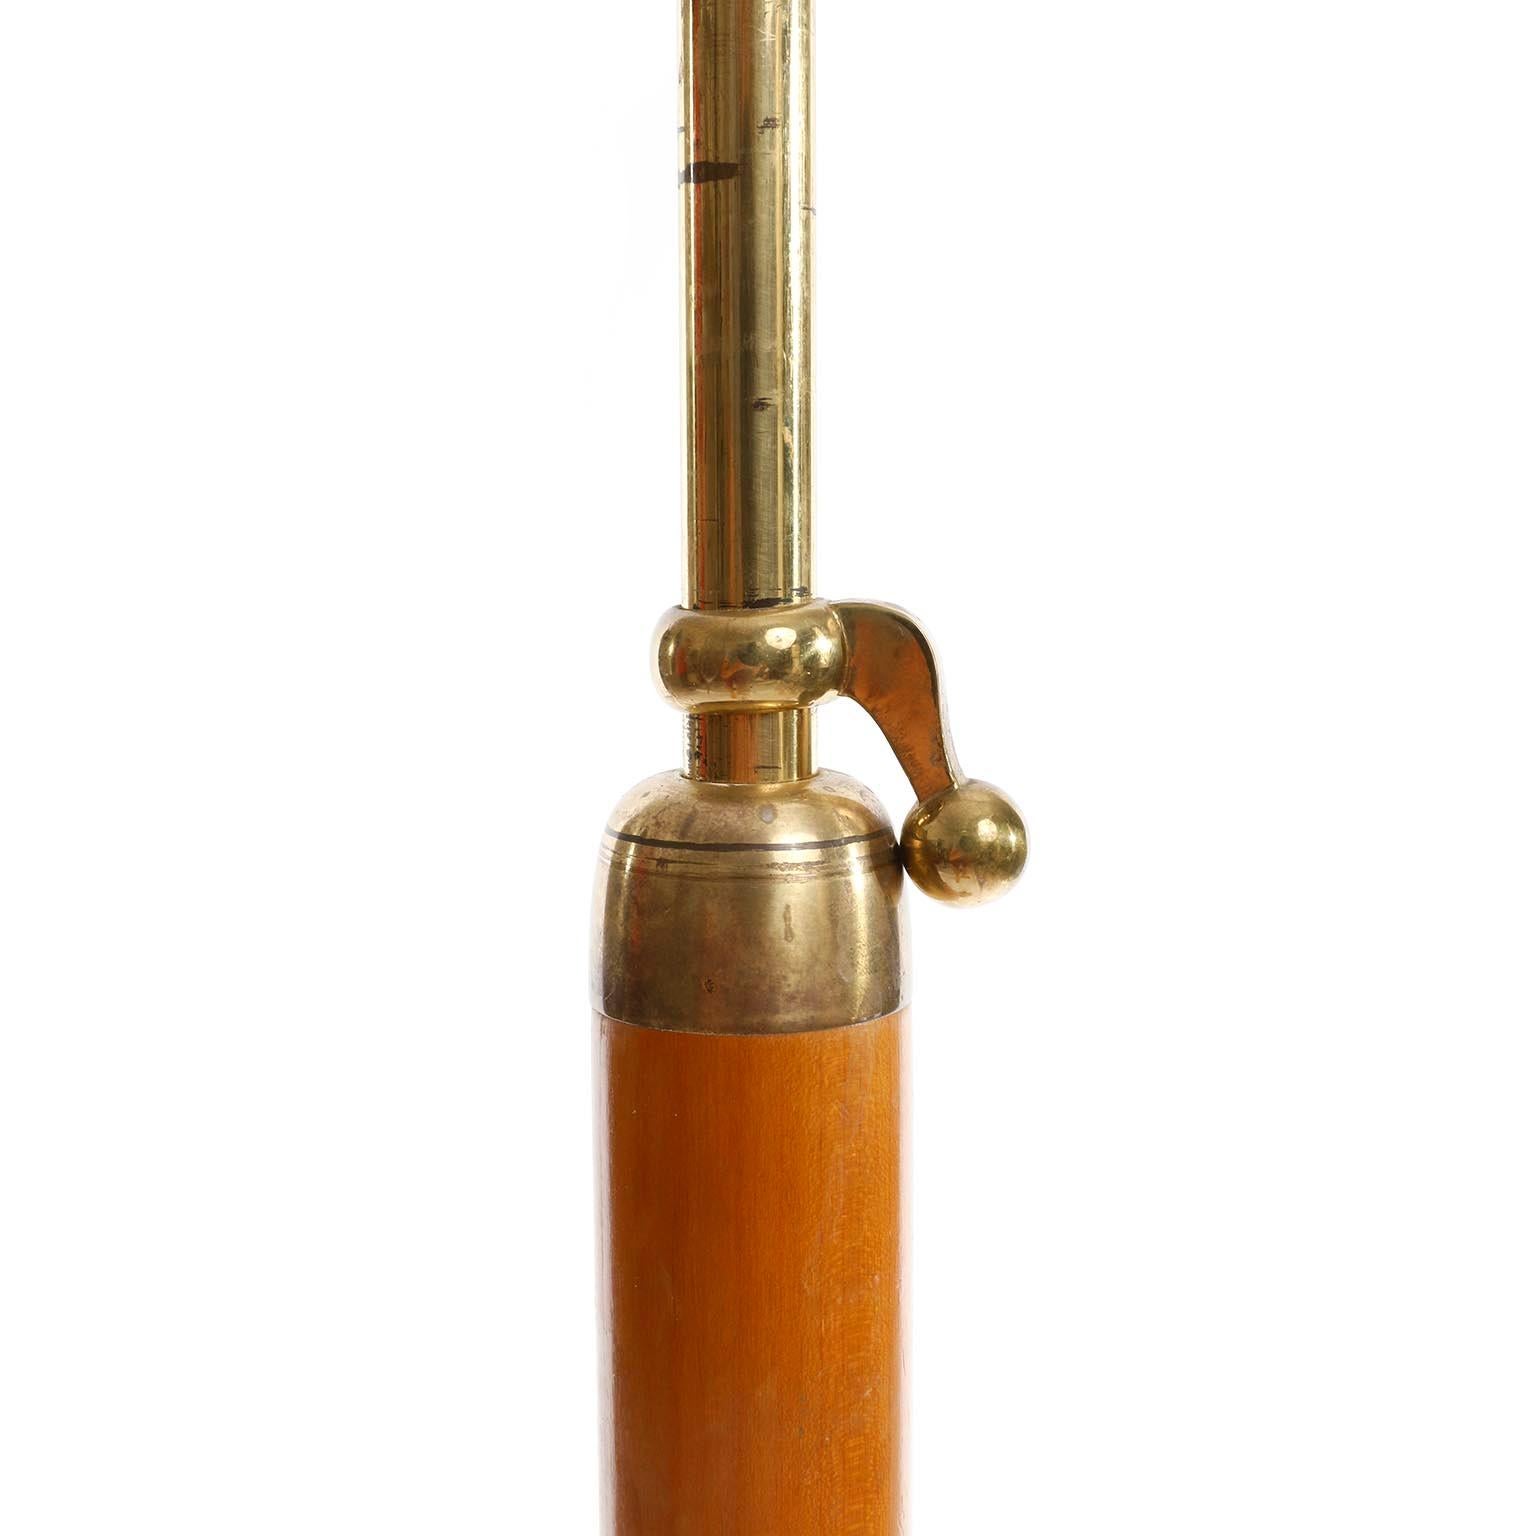 Josef Frank Adjustable Floor Lamp 'Neolift' by J.T. Kalmar, Brass Wood, 1950s For Sale 1